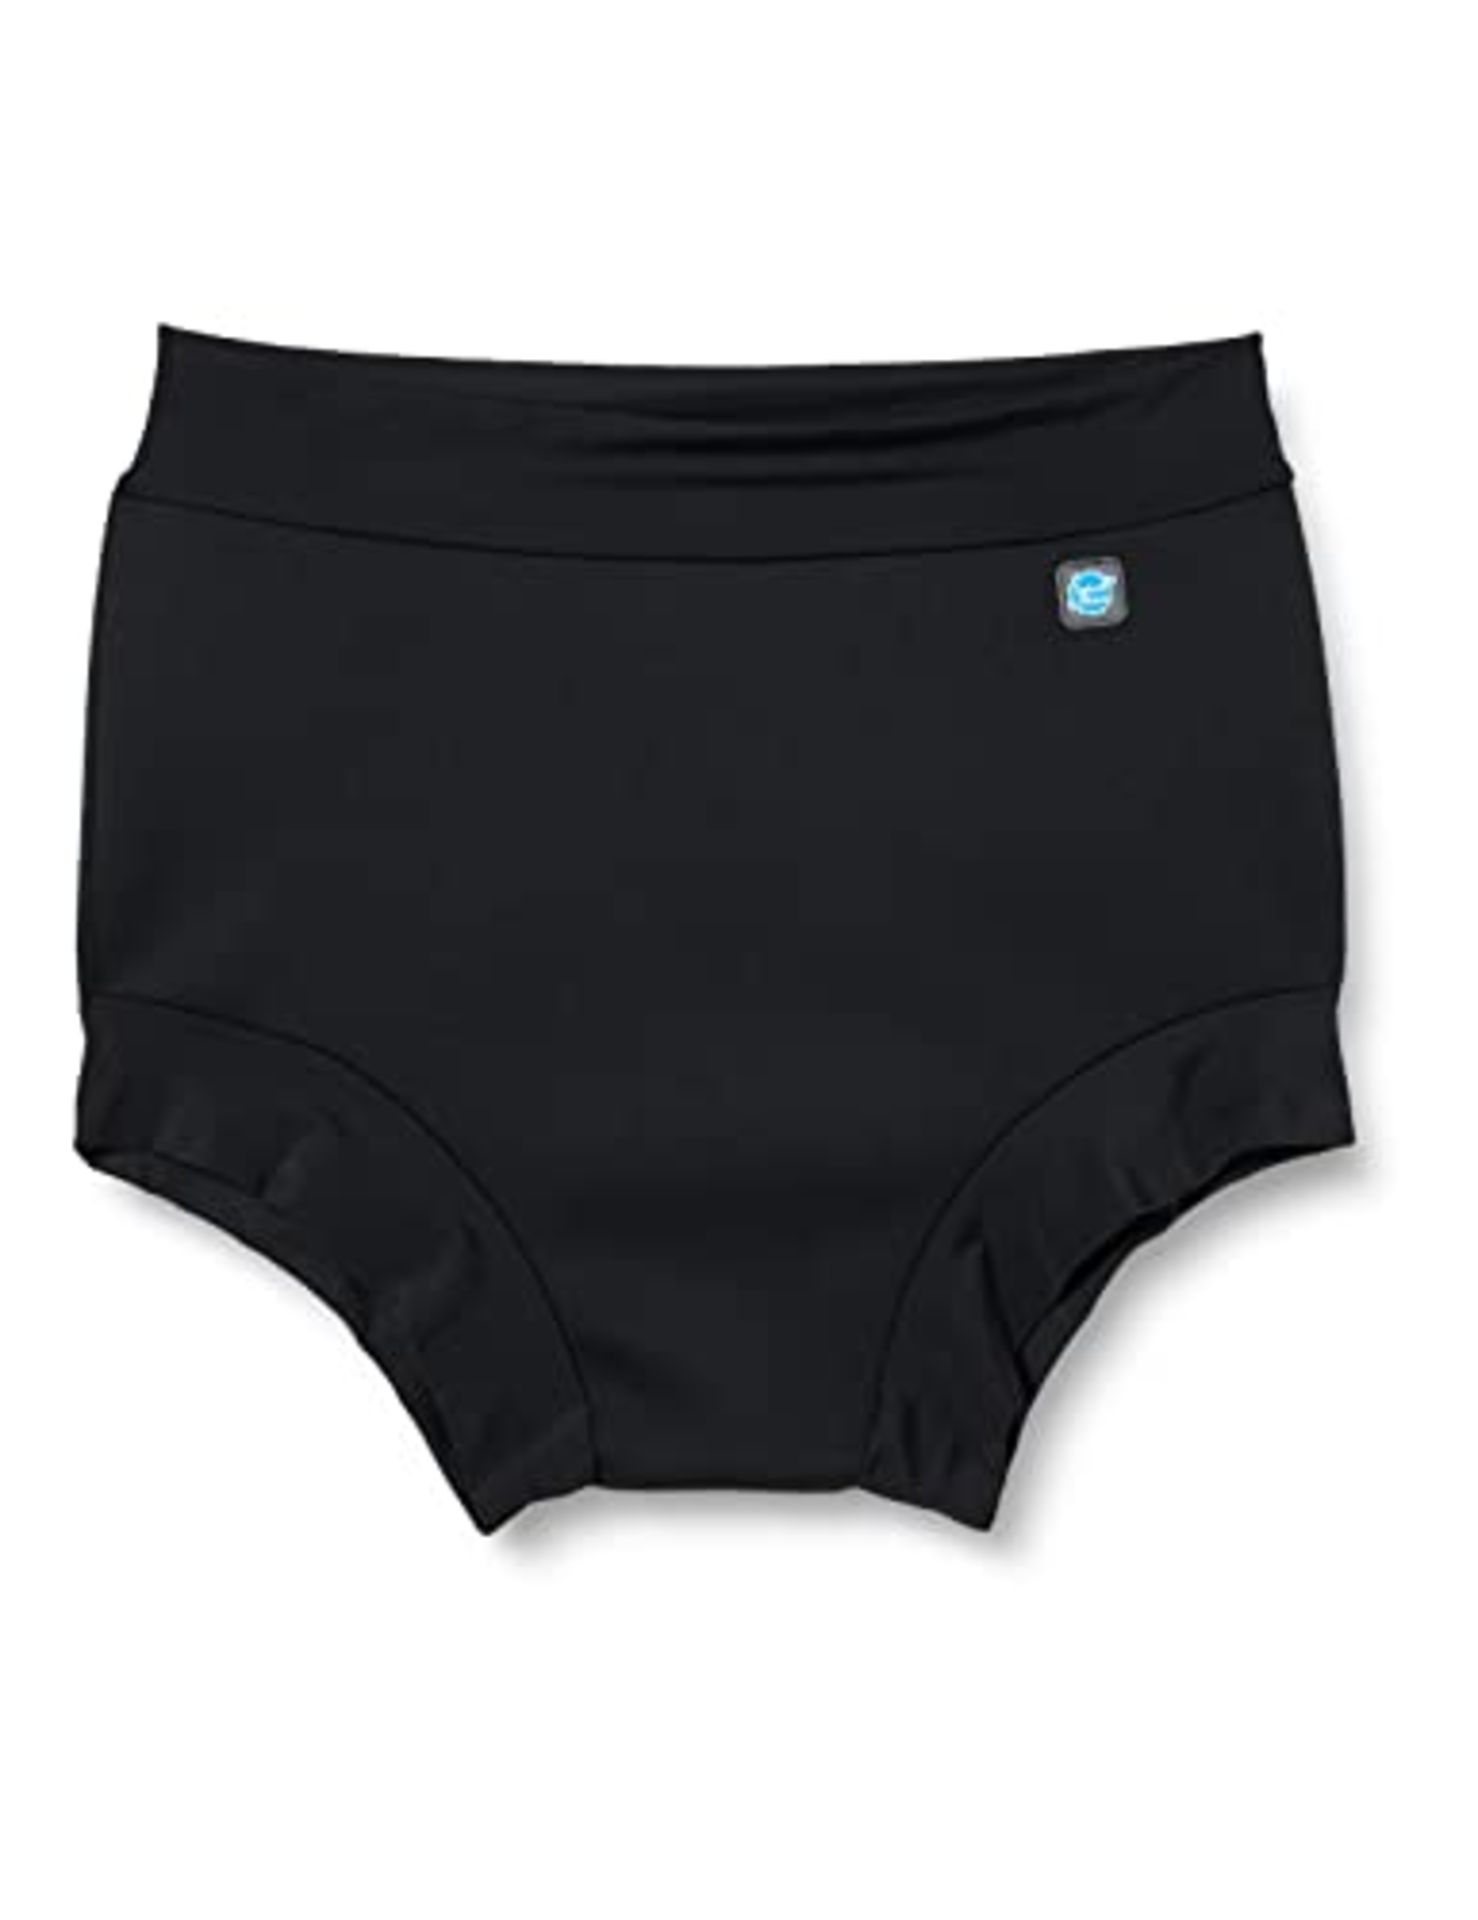 Splash About swim shorts for adults - Black, Medium - Bild 4 aus 6